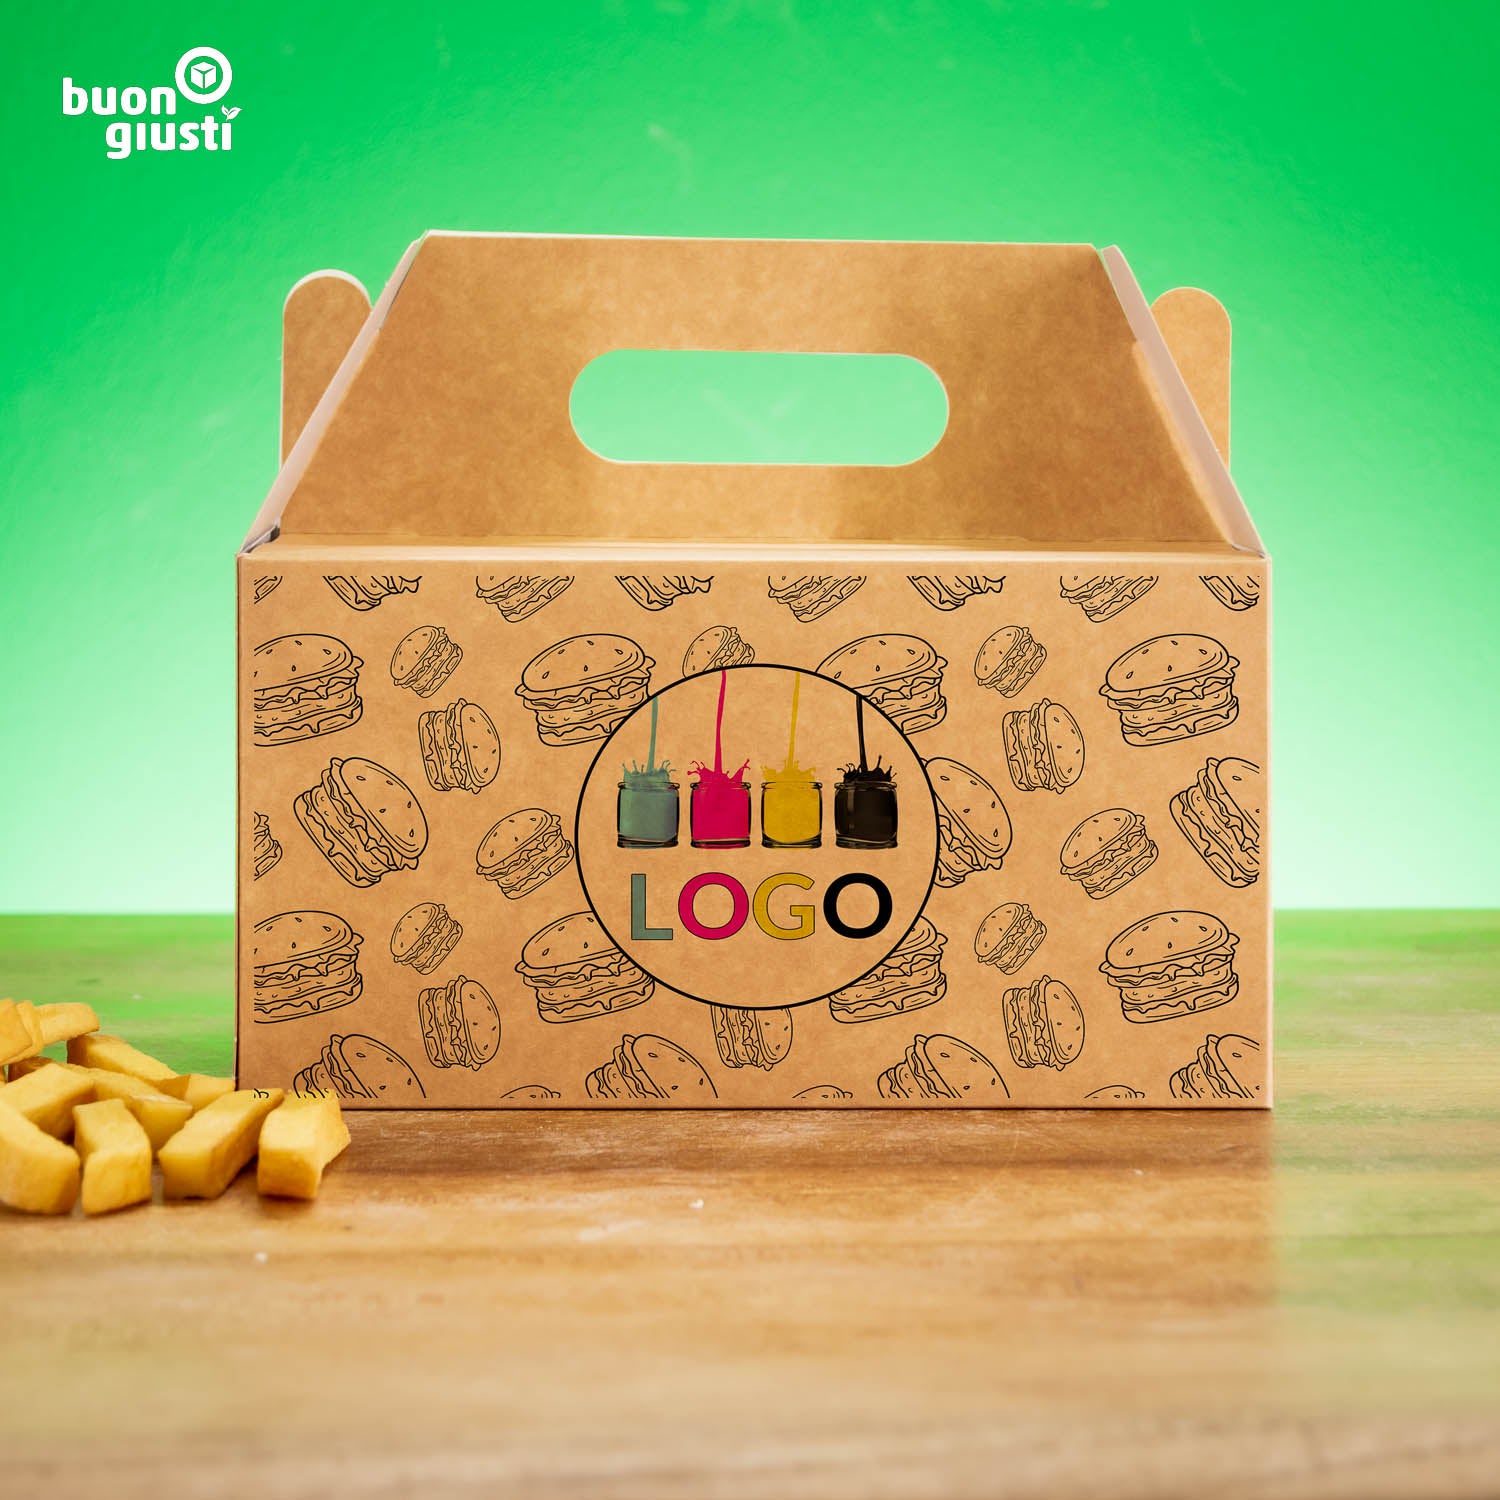 200x Lunchbox mit Griff Personalisiert 21x15x11 cm faltbar Food Box braun | Gedruckt in ca. 3 Tagen! - Burger - buongiusti AG - personalisiert ab 100 Stück